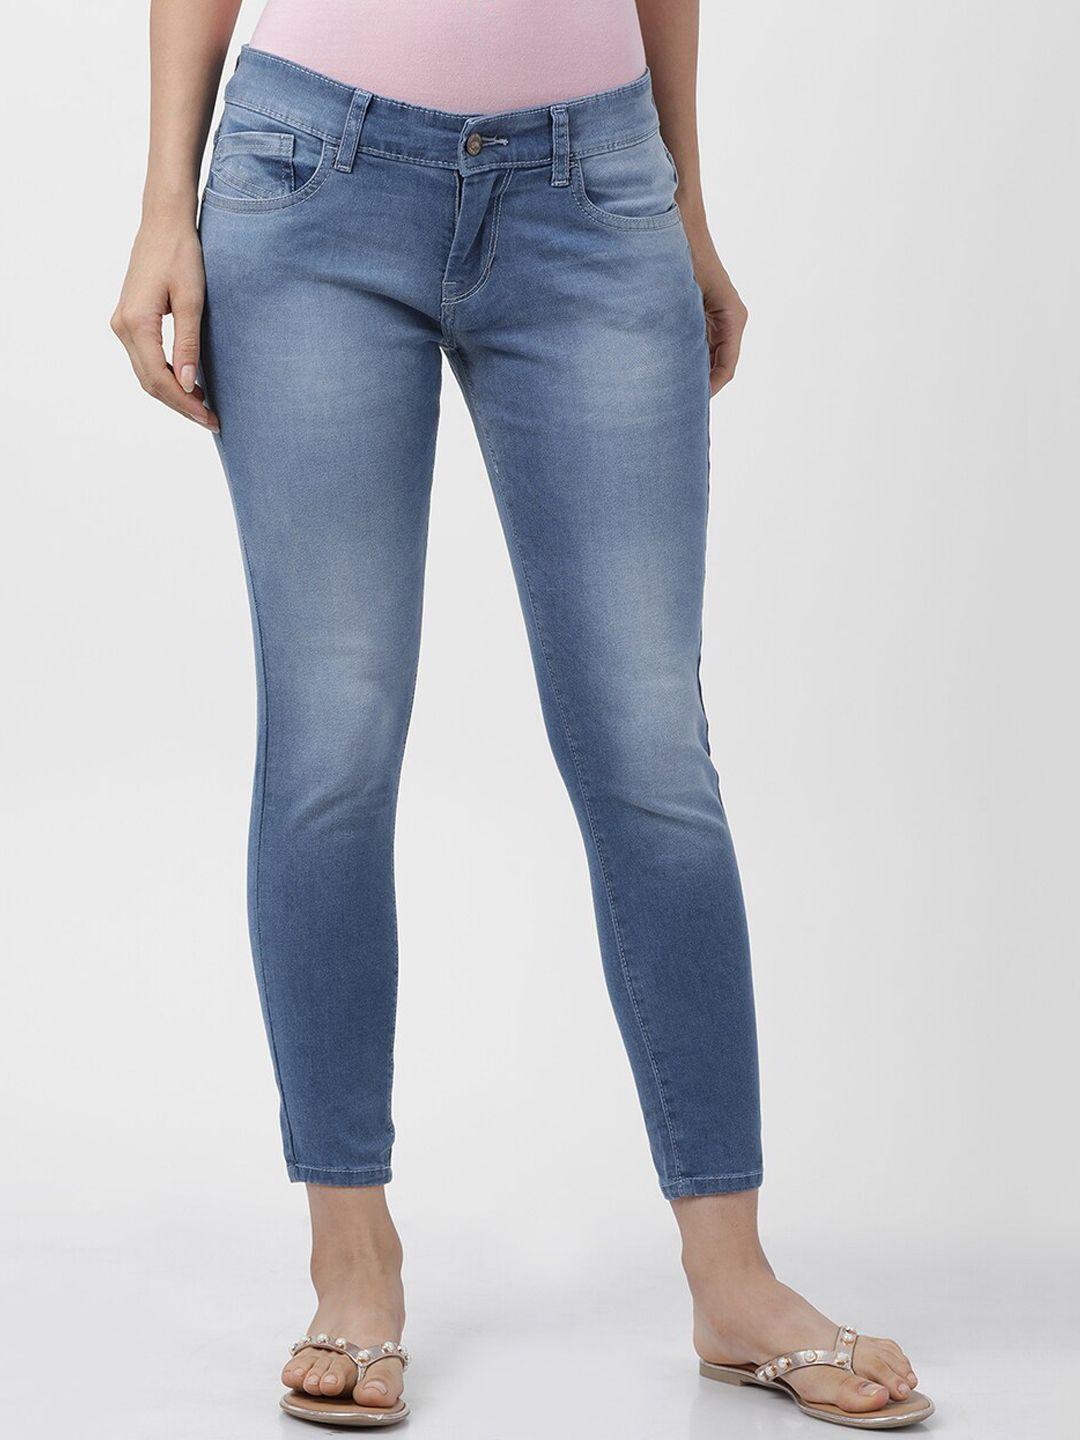 llak jeans women blue skinny fit mid-rise clean look jeans